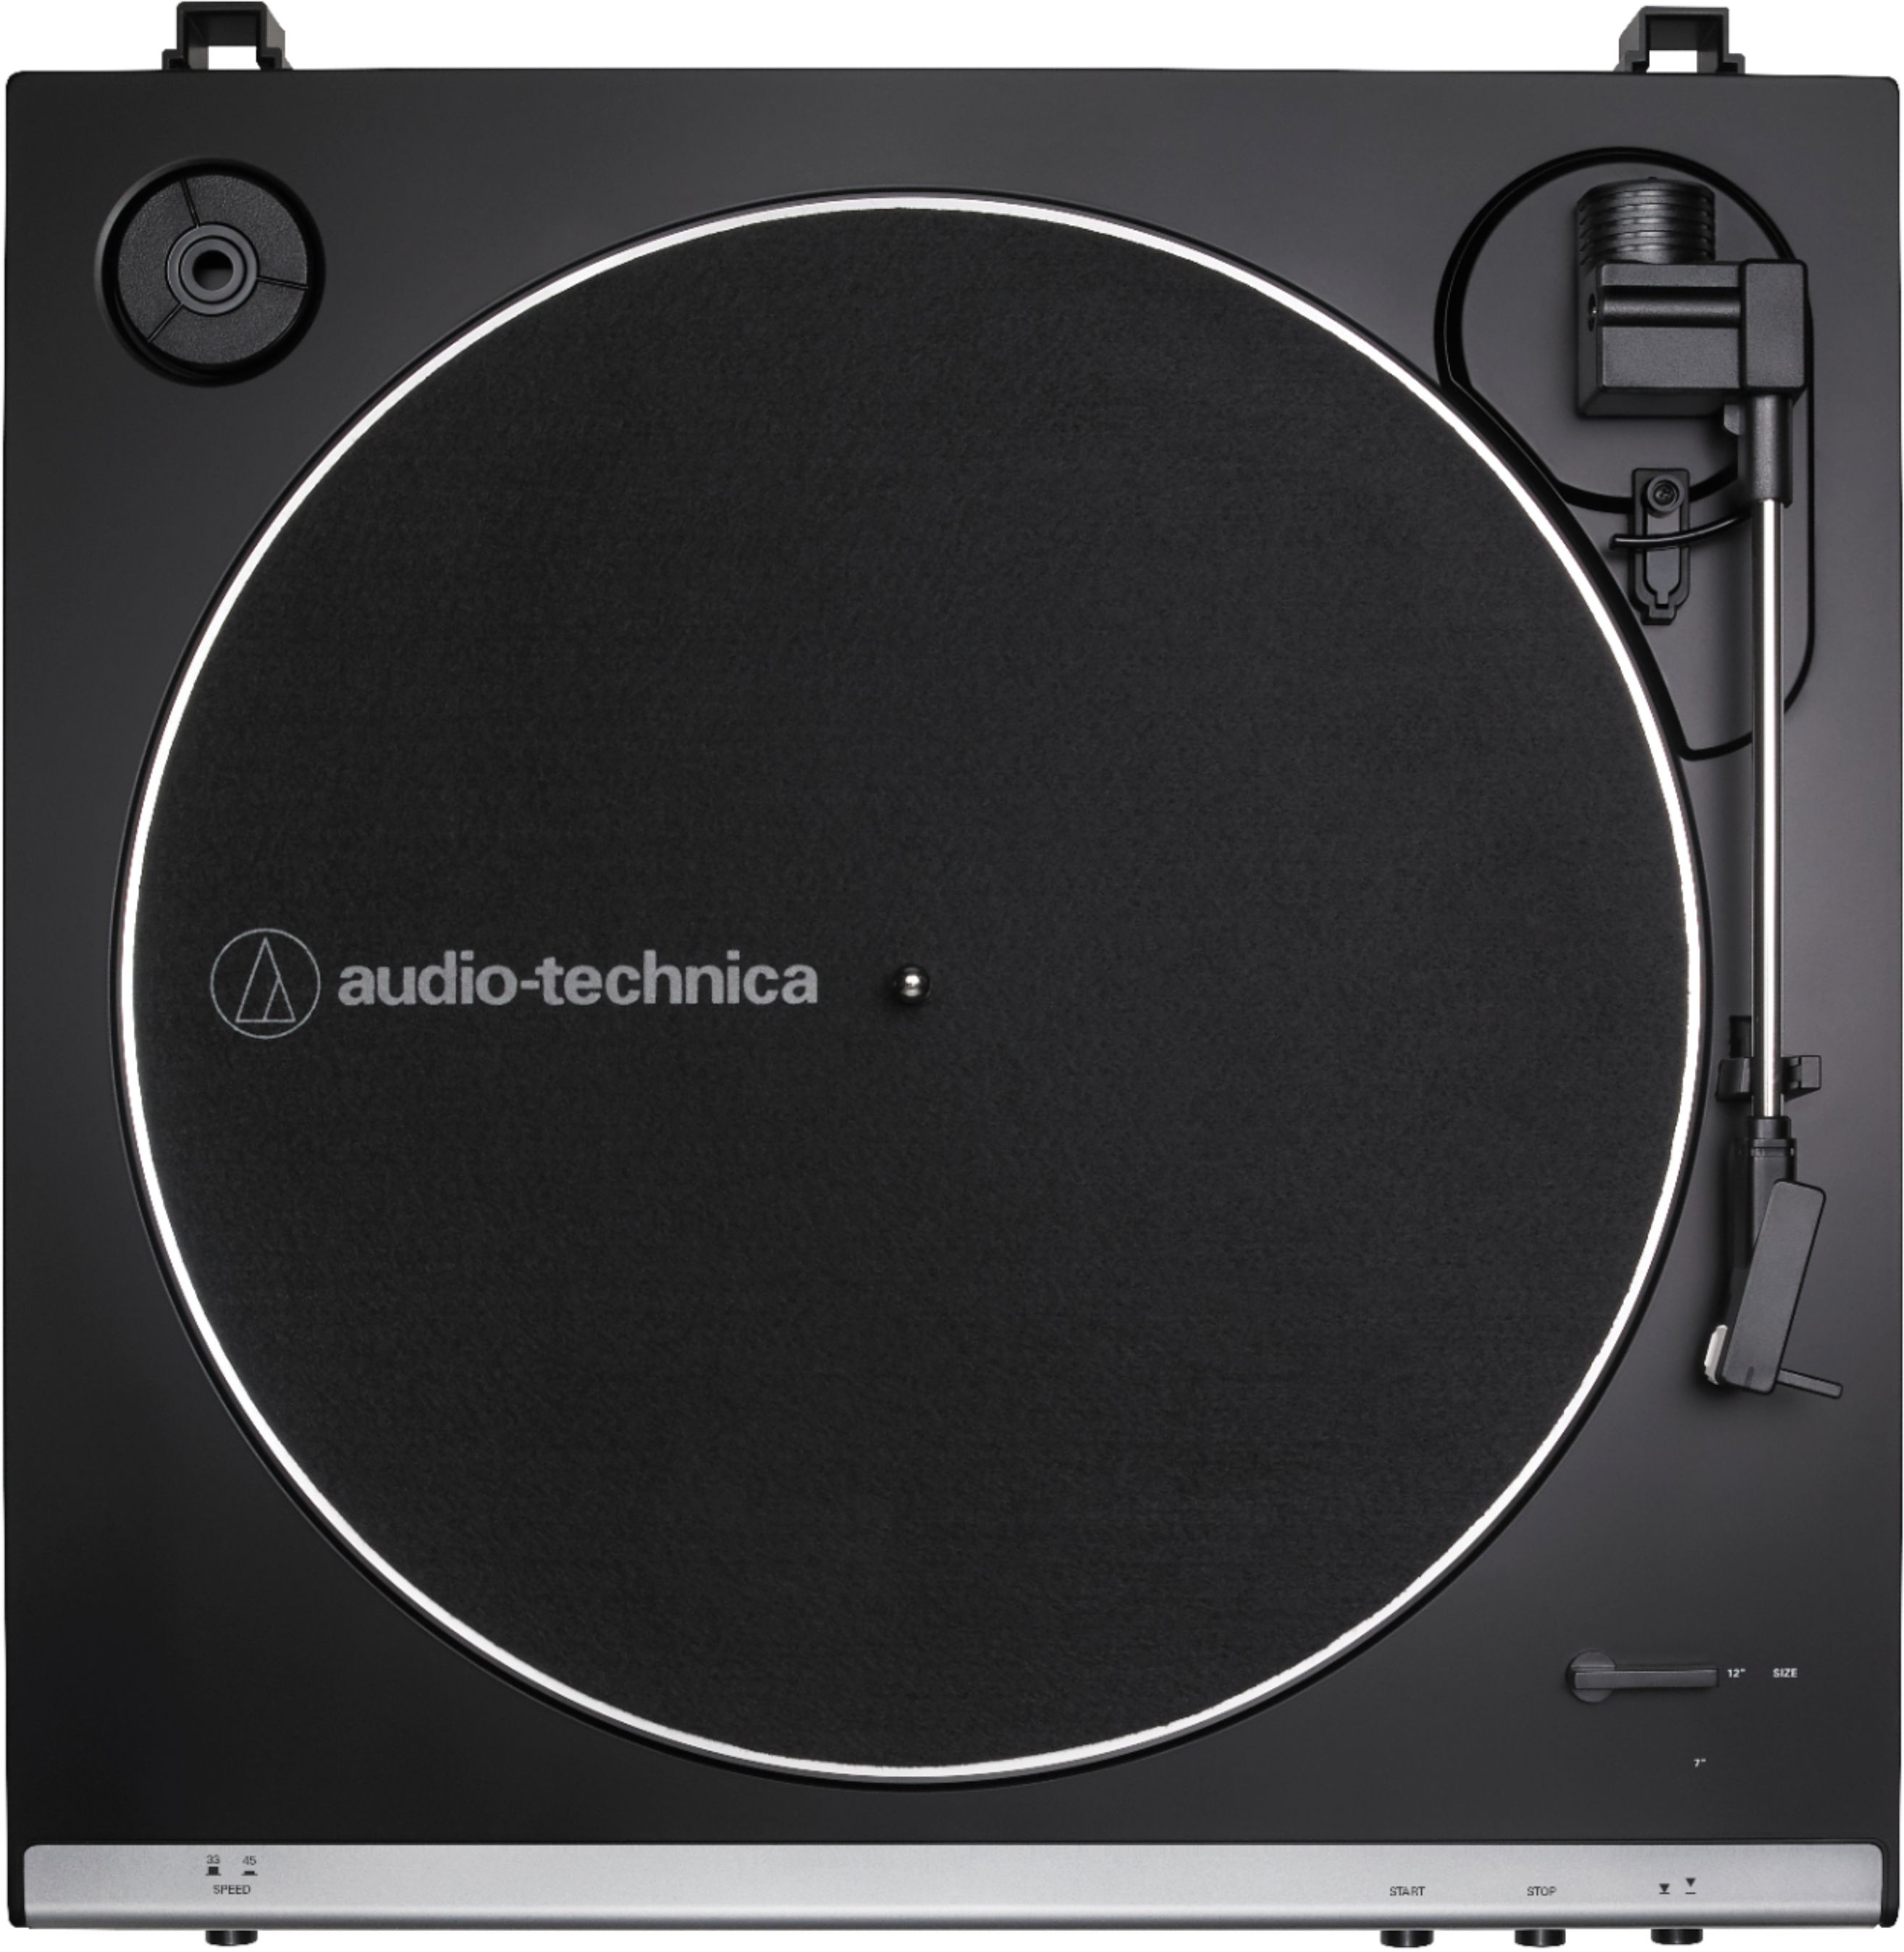 Audio-Technica - Stereo Turntable - Black/Gunmetal